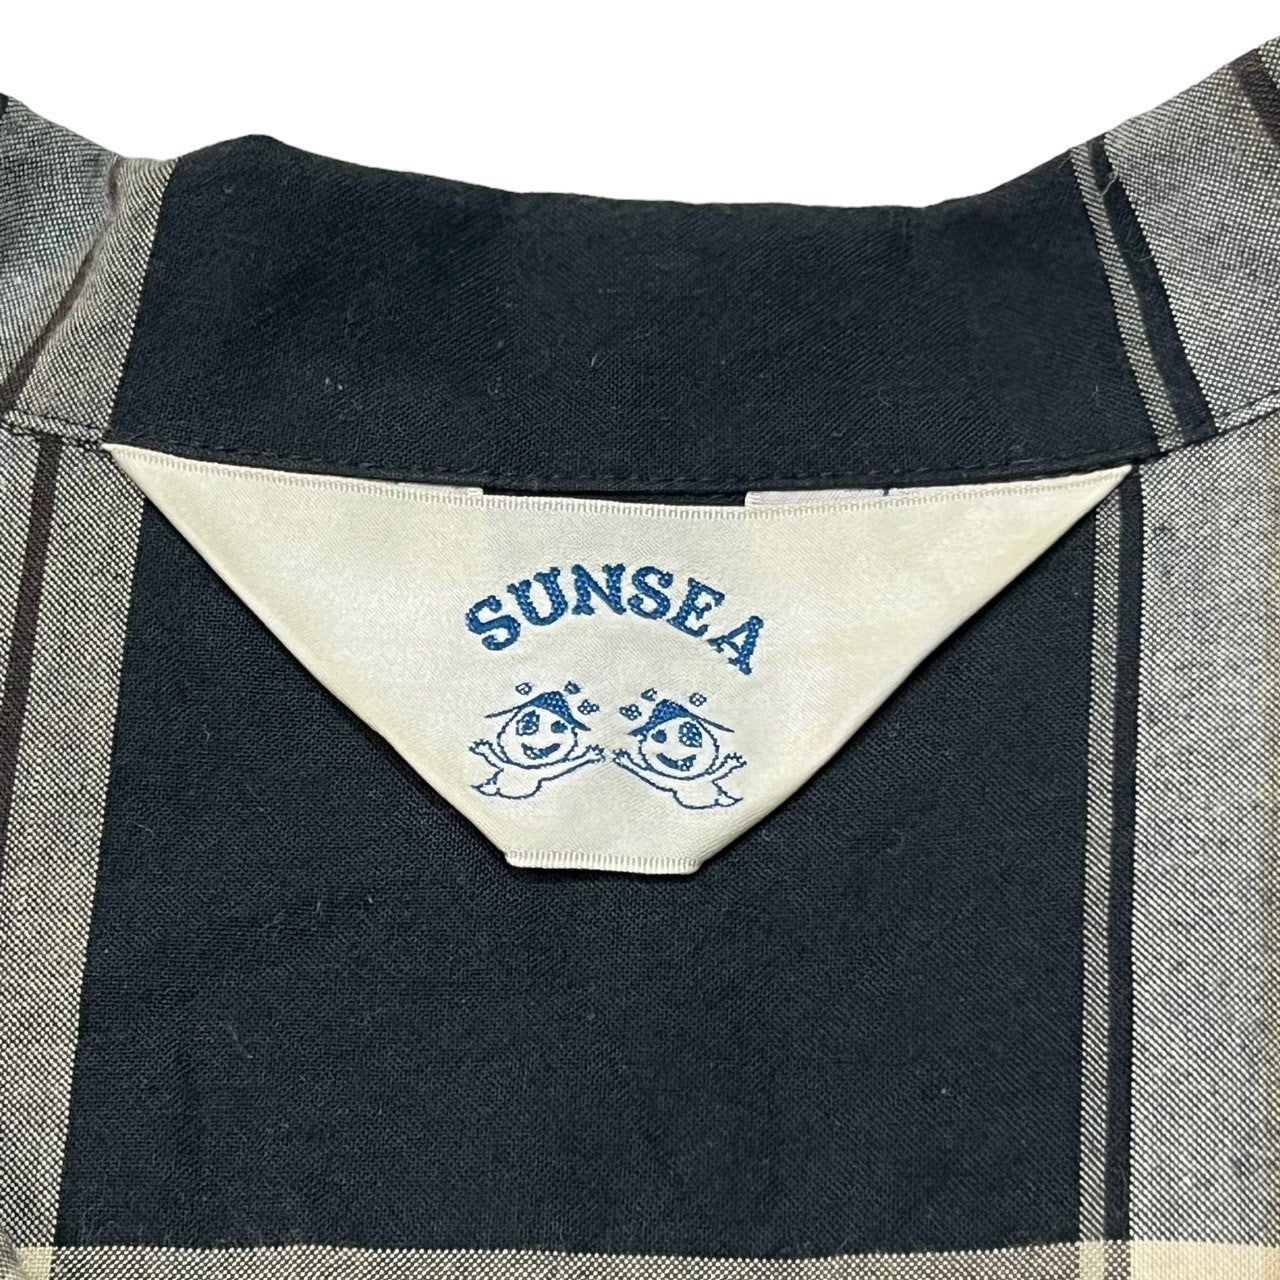 SUNSEA(サンシー) 17SS CHECK FRIED SHRIMP SHIRT チェック フライドシュリンプ シャツ 半袖 開襟 シャツ オープンカラー 17S17 SIZE 3(L) ブラック×グレー